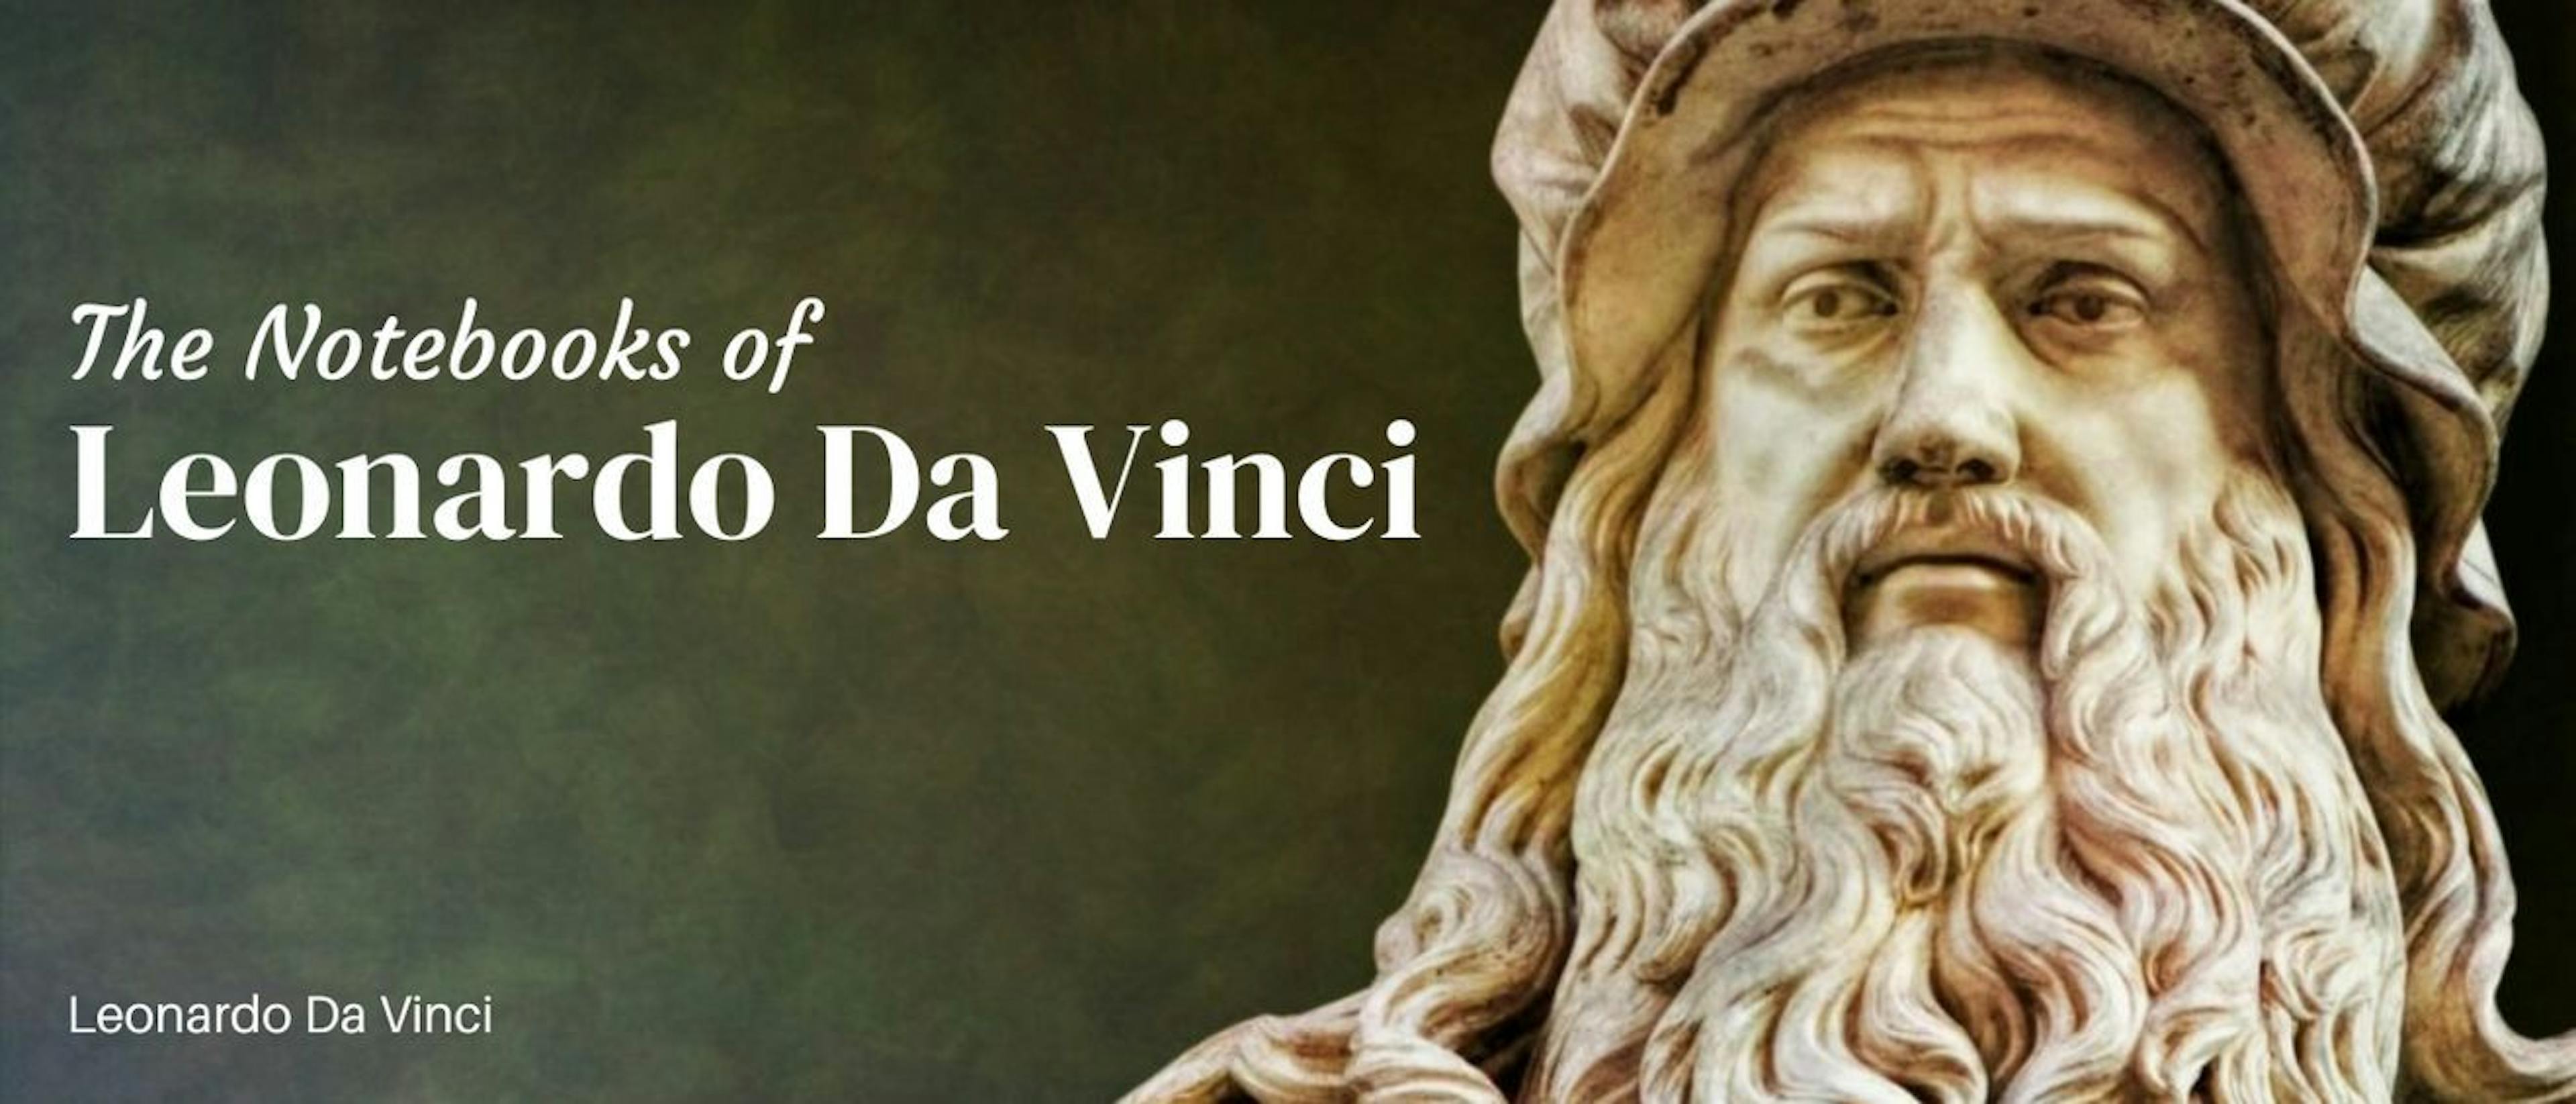 featured image - The most famous of Leonardo da Vinci's works